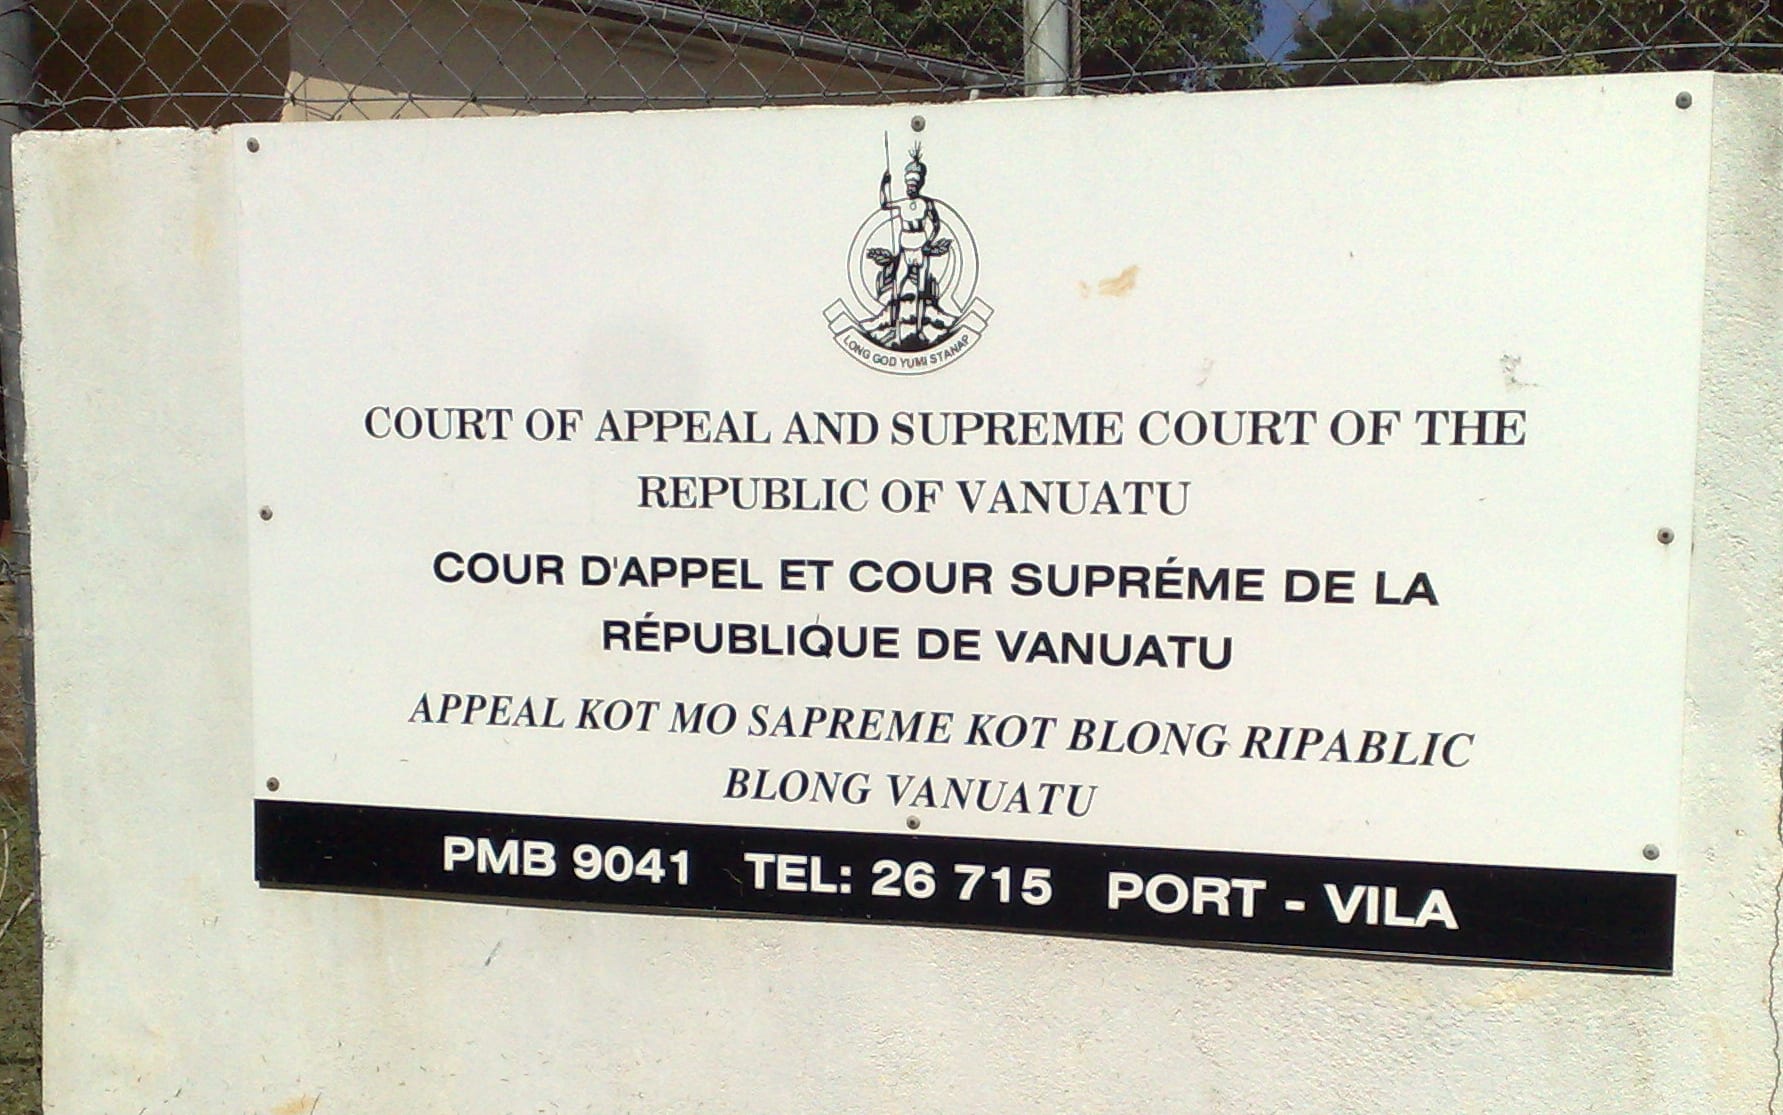 Vanuatu Supreme Court entrance.